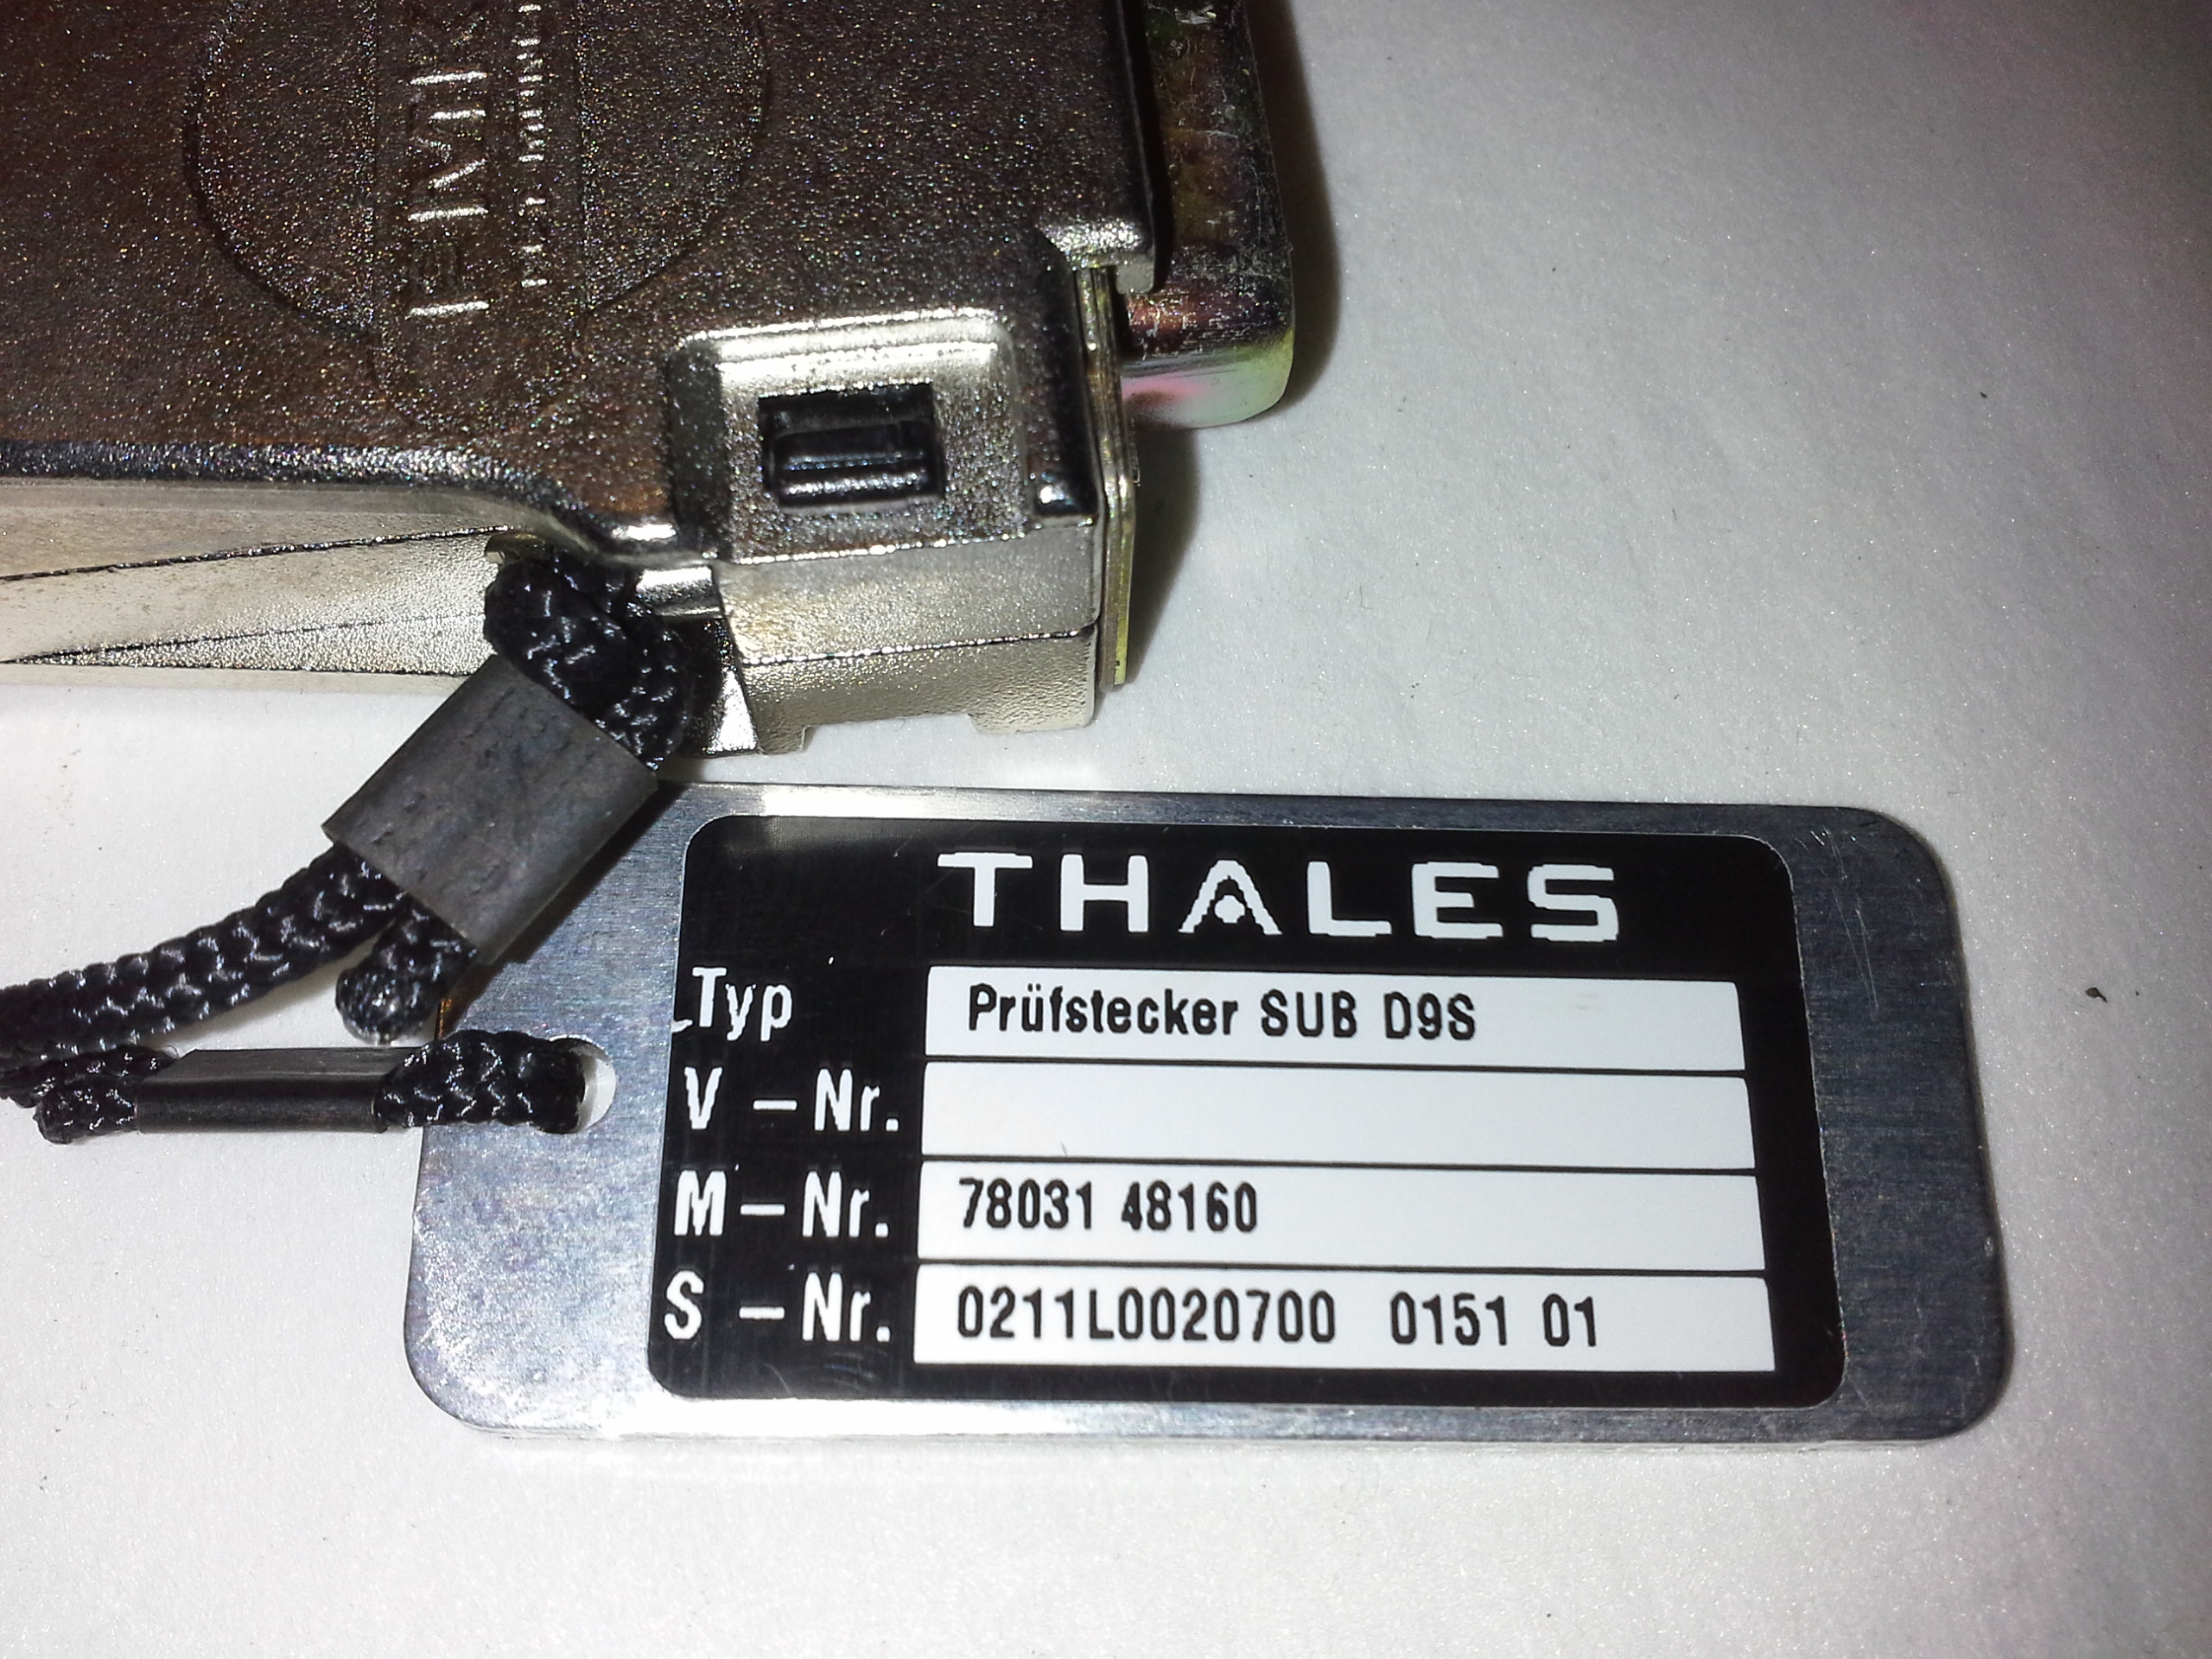 Thales Prüfstecker SUB D-9-S